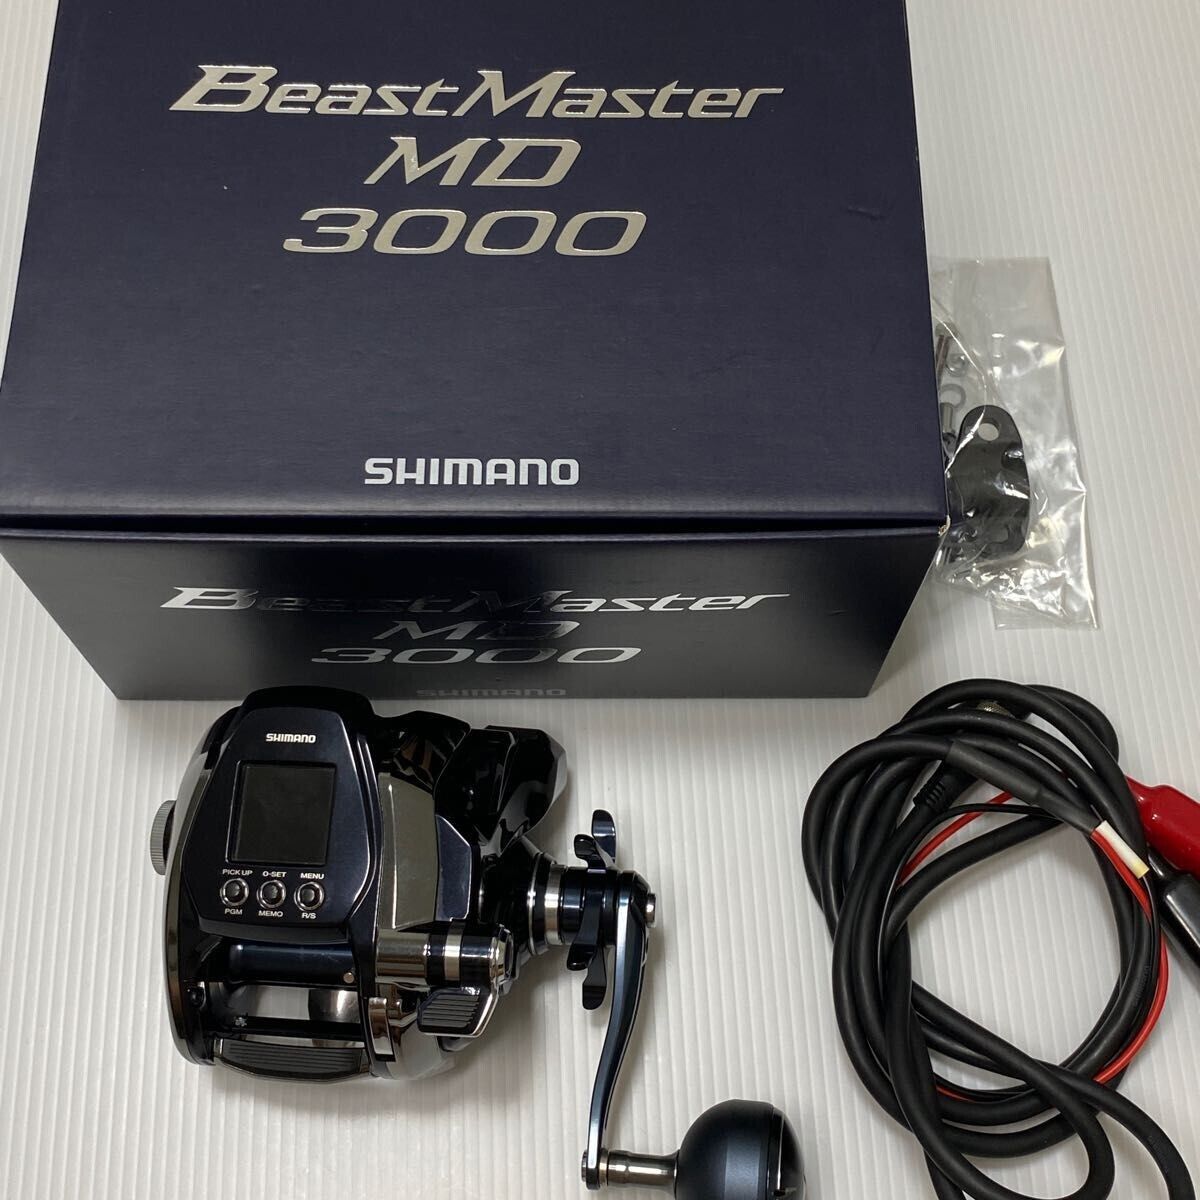 Shimano 20 Beast Master MD3000 4.6 RH Multi-Language Display JP/EN/CN/KR F/S JP